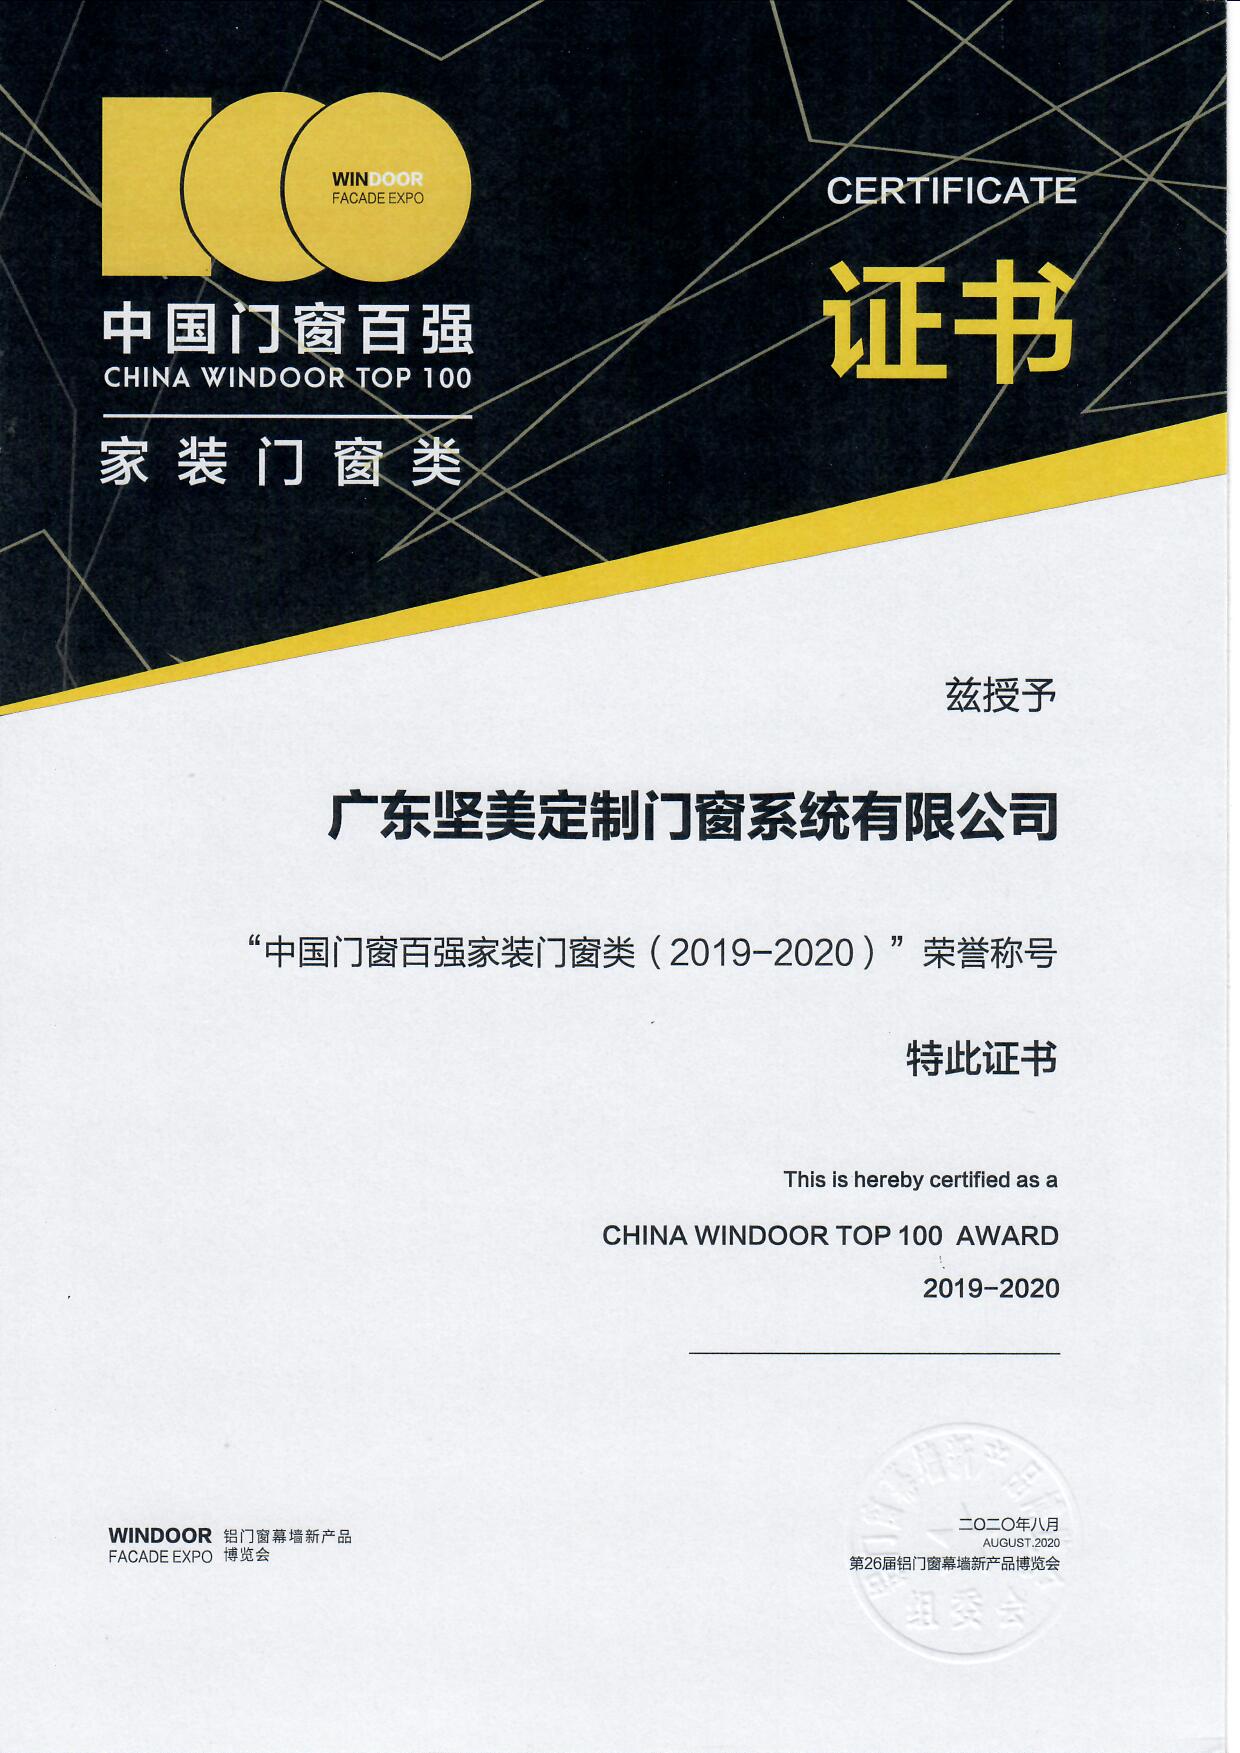 China Windoor Top100 Award 2019-2020